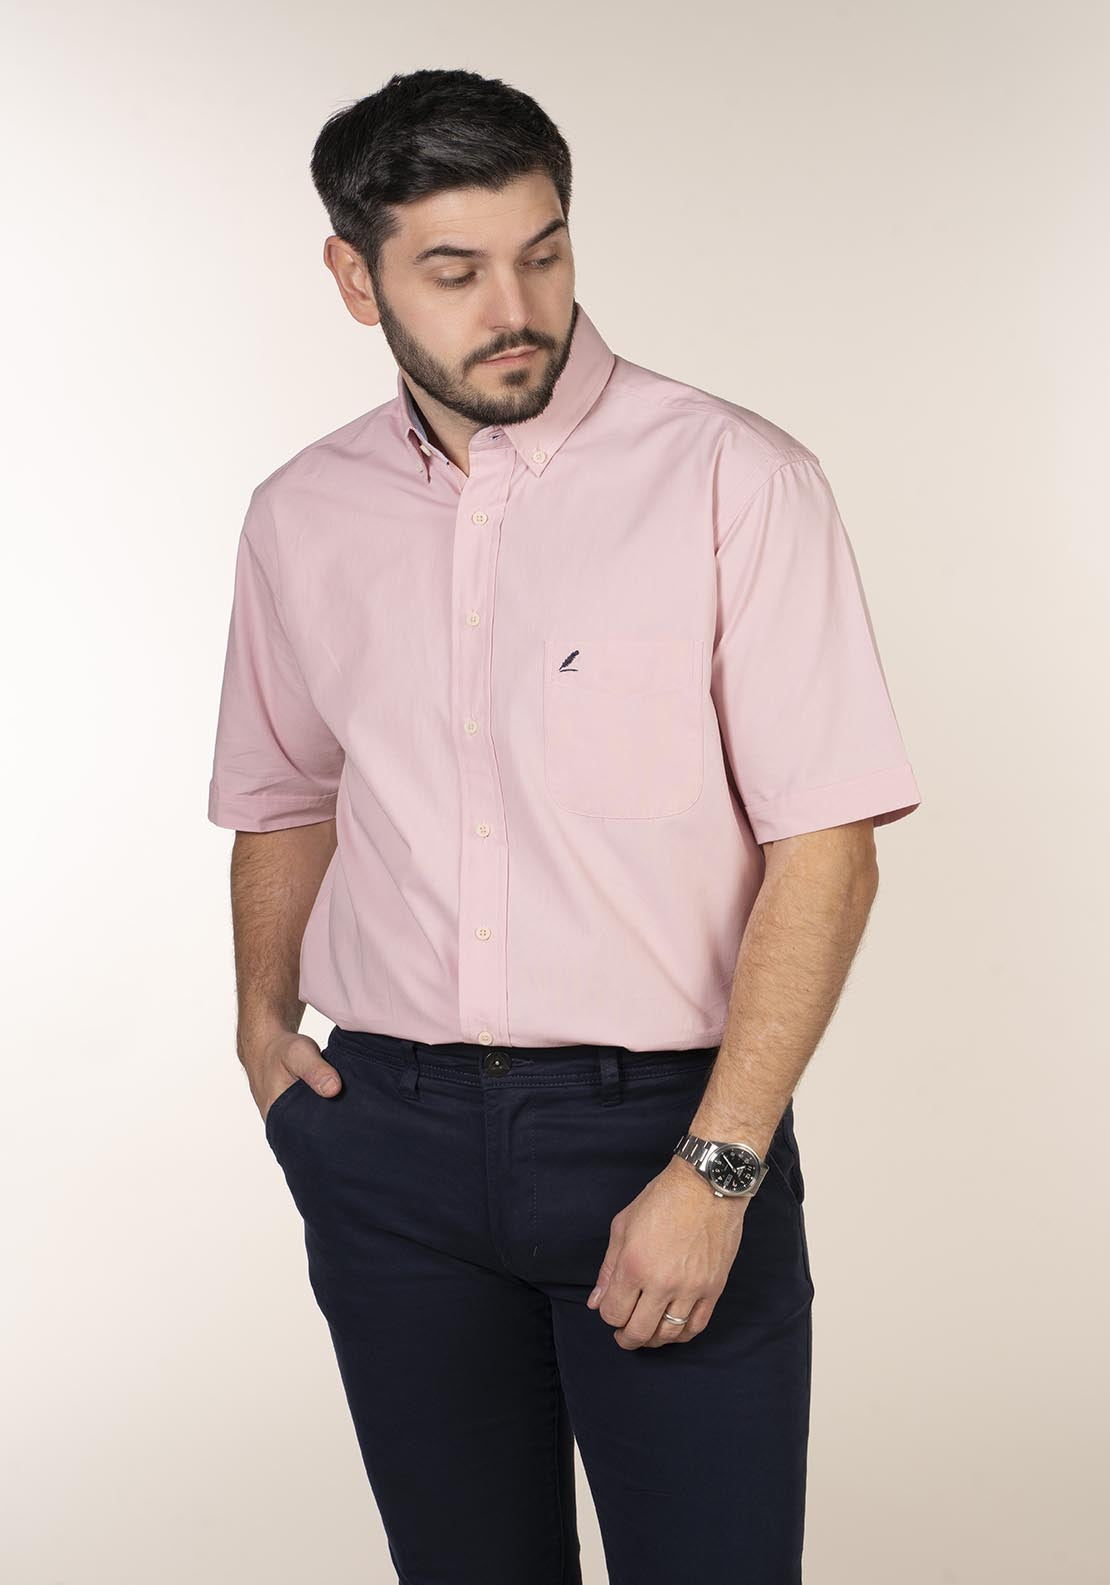 Yeats Casual Plain Short Sleeve Shirt - Pink 4 Shaws Department Stores